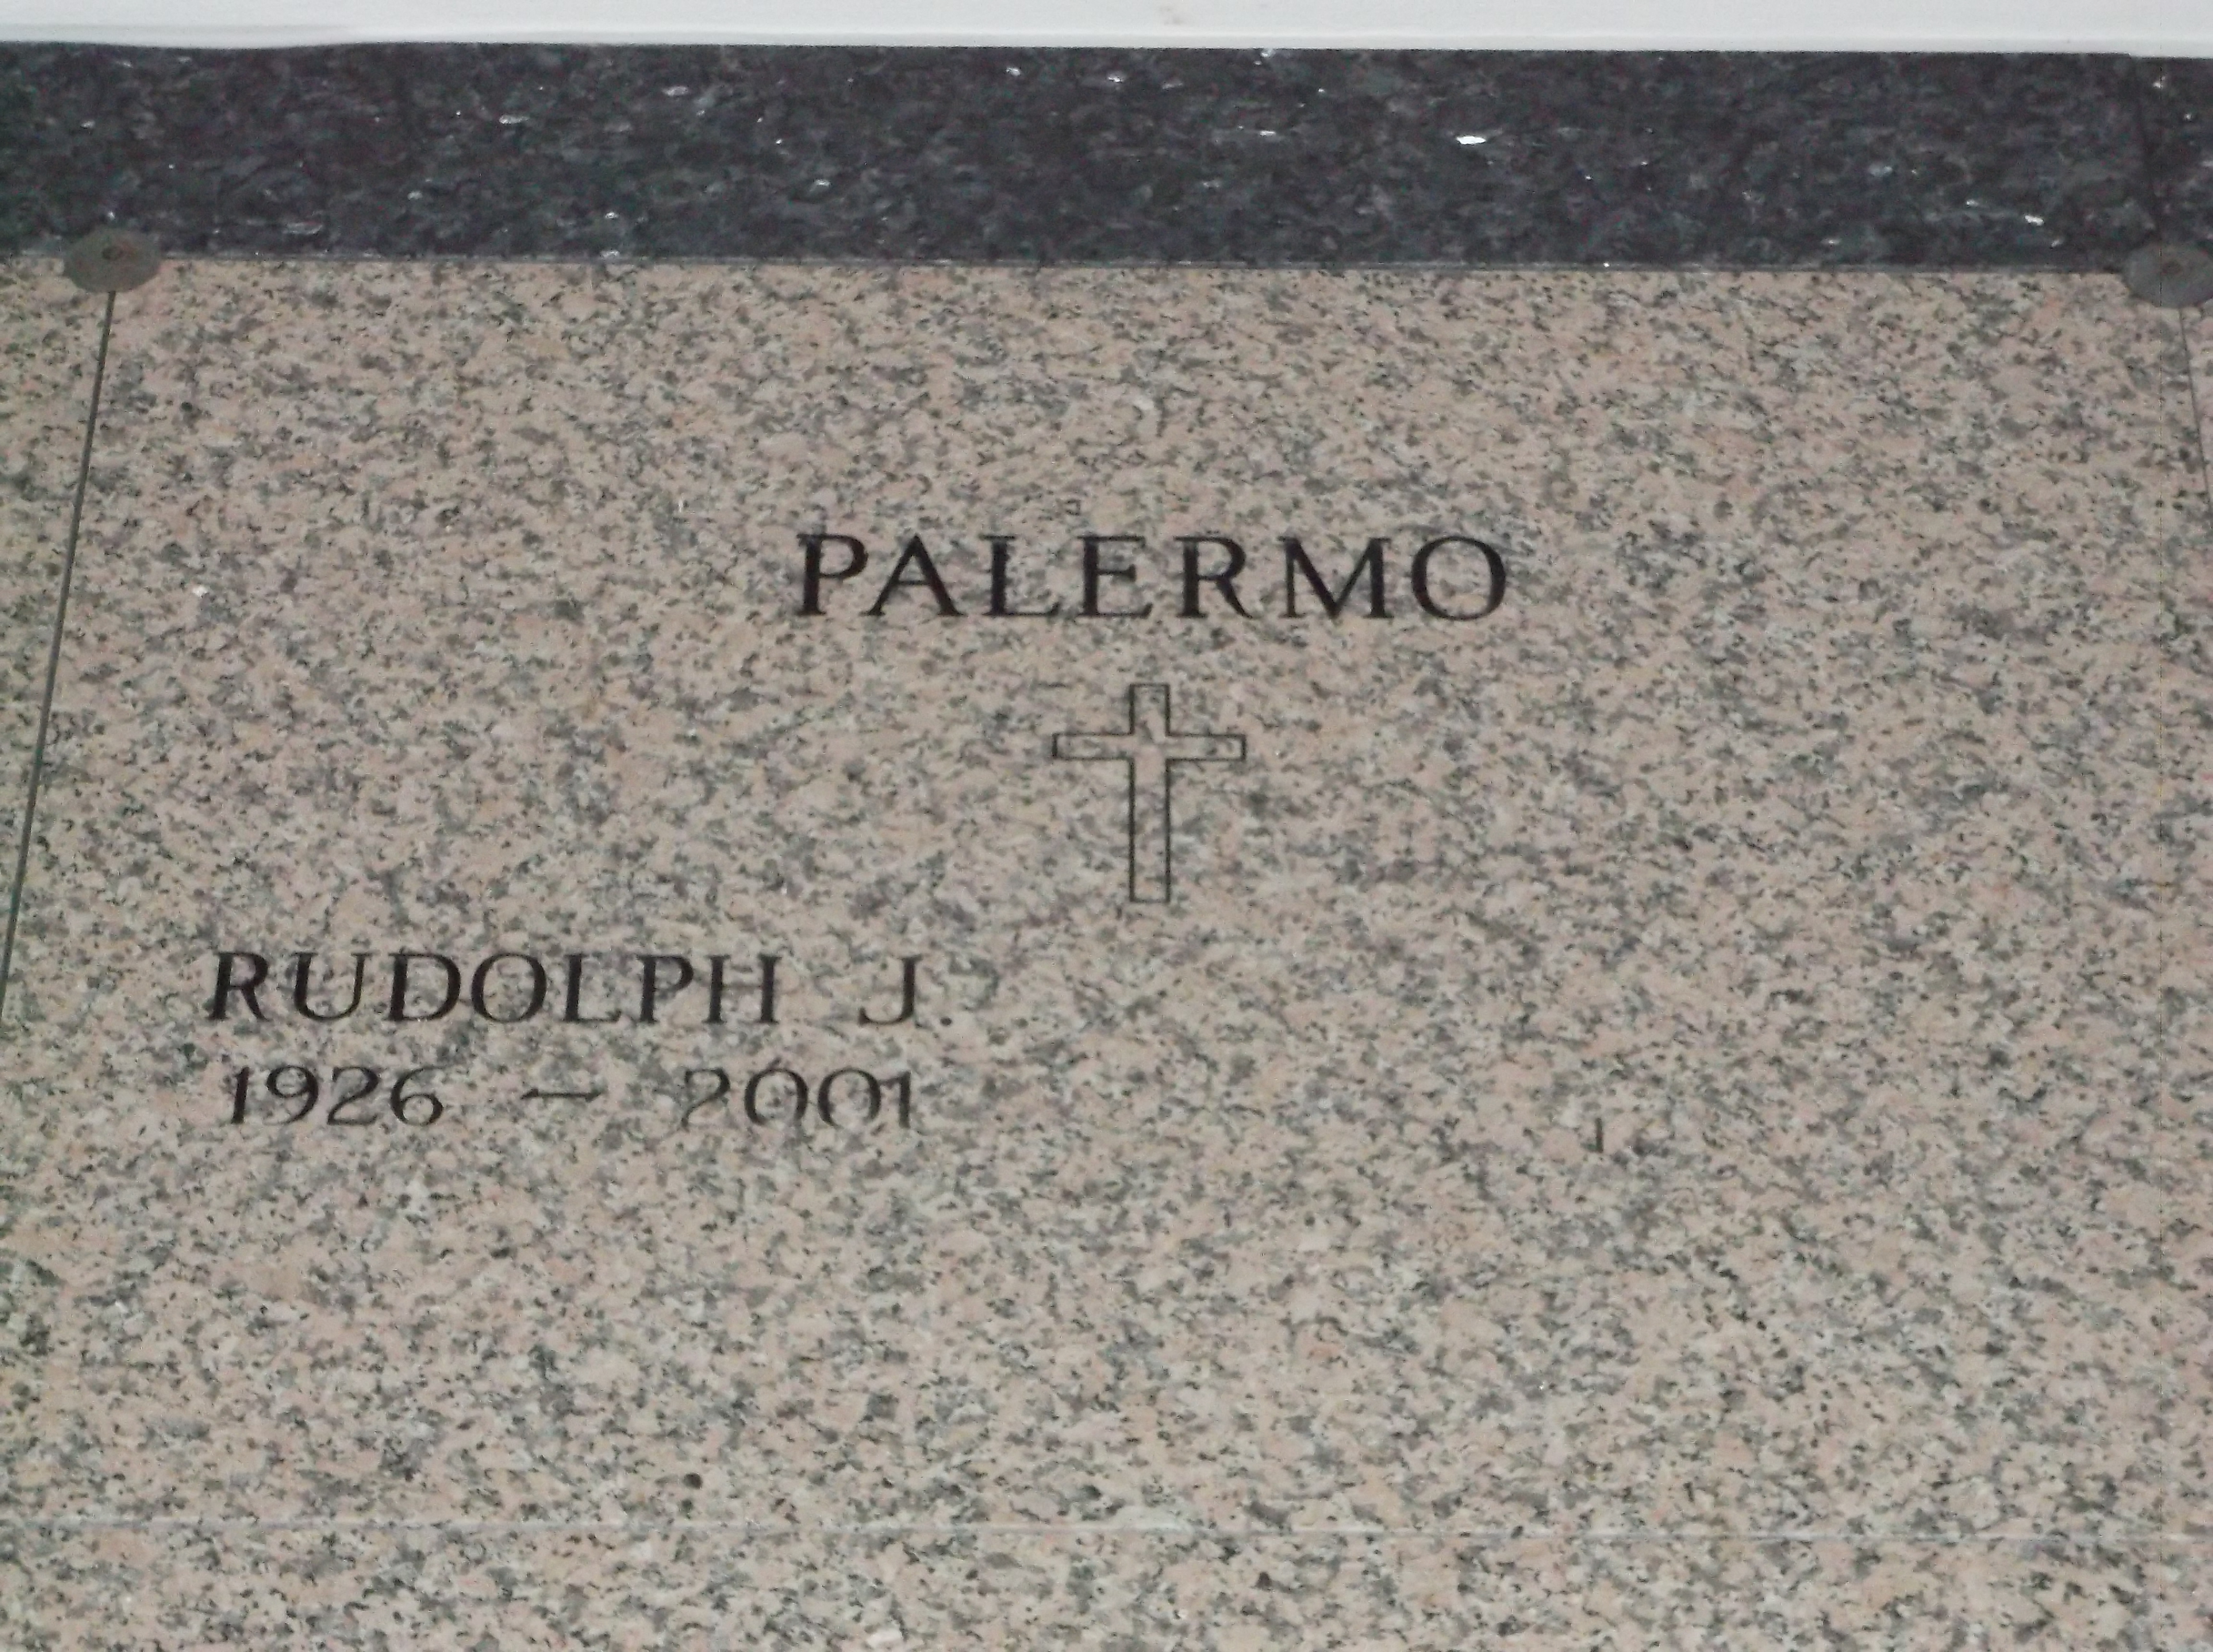 Rudolph J Palermo